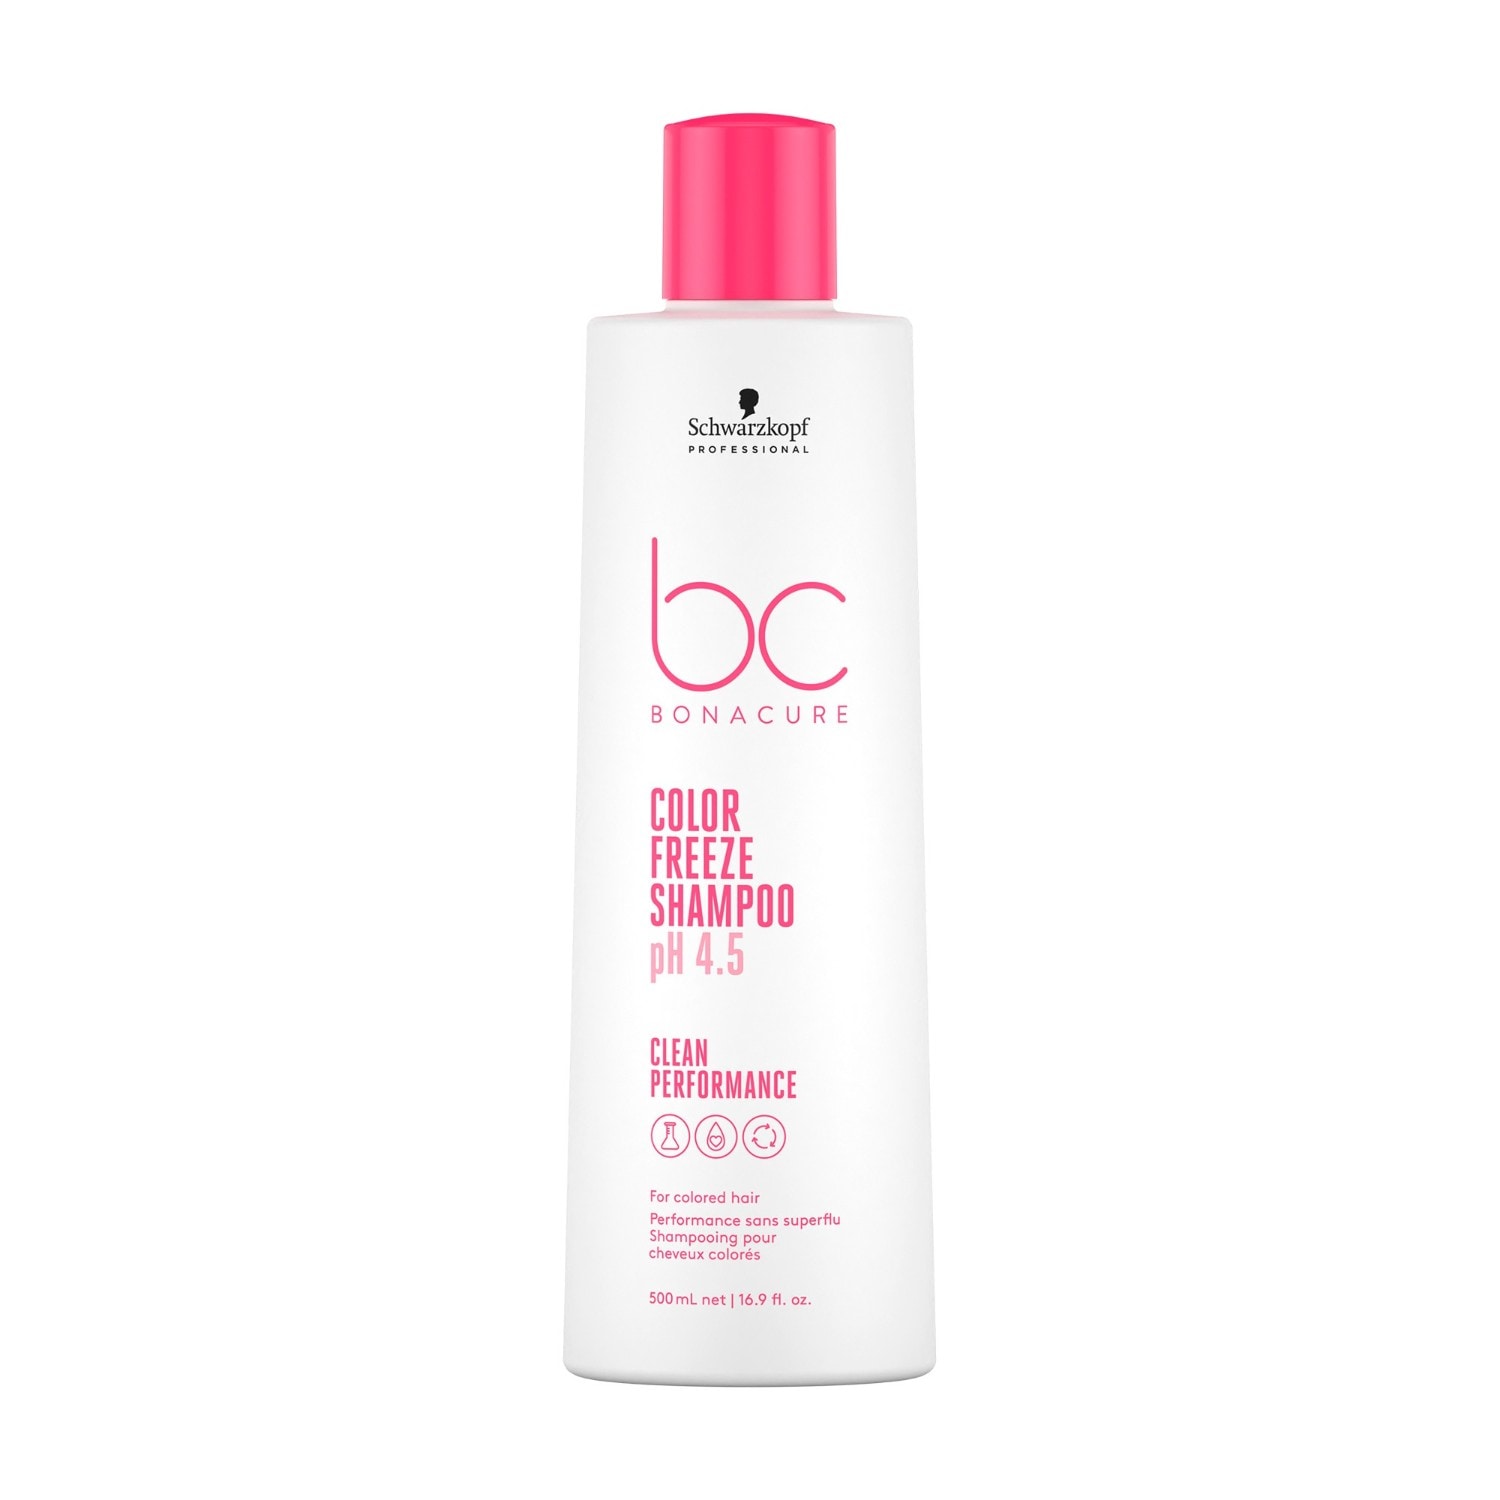 Schwarzkopf Professional BC BONACURE pH 4.5 Color Freeze Shampoo, 